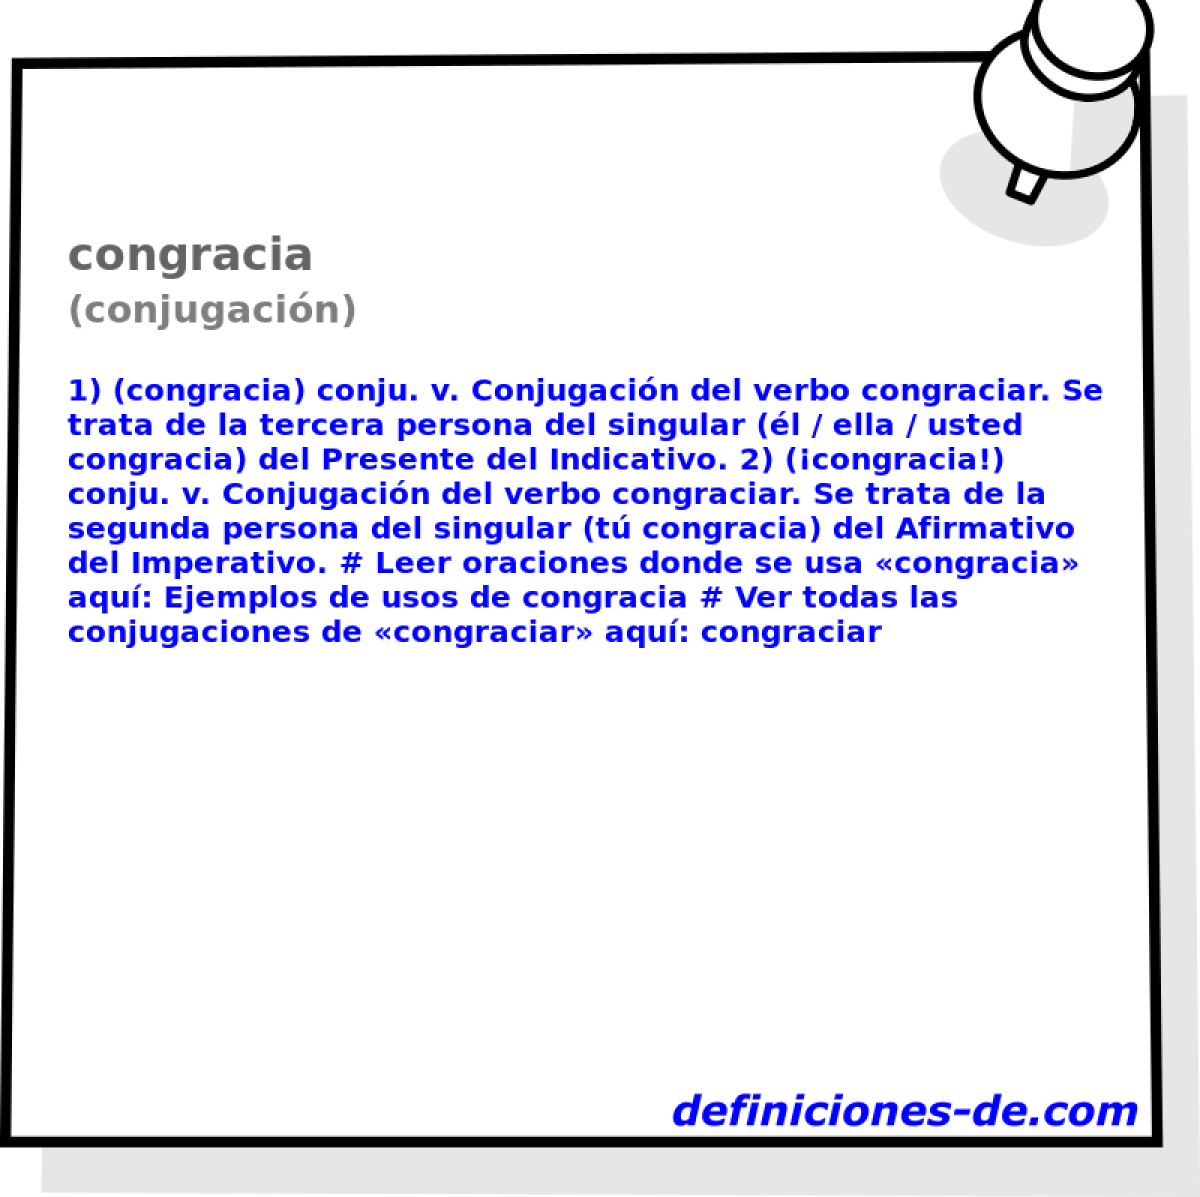 congracia (conjugacin)